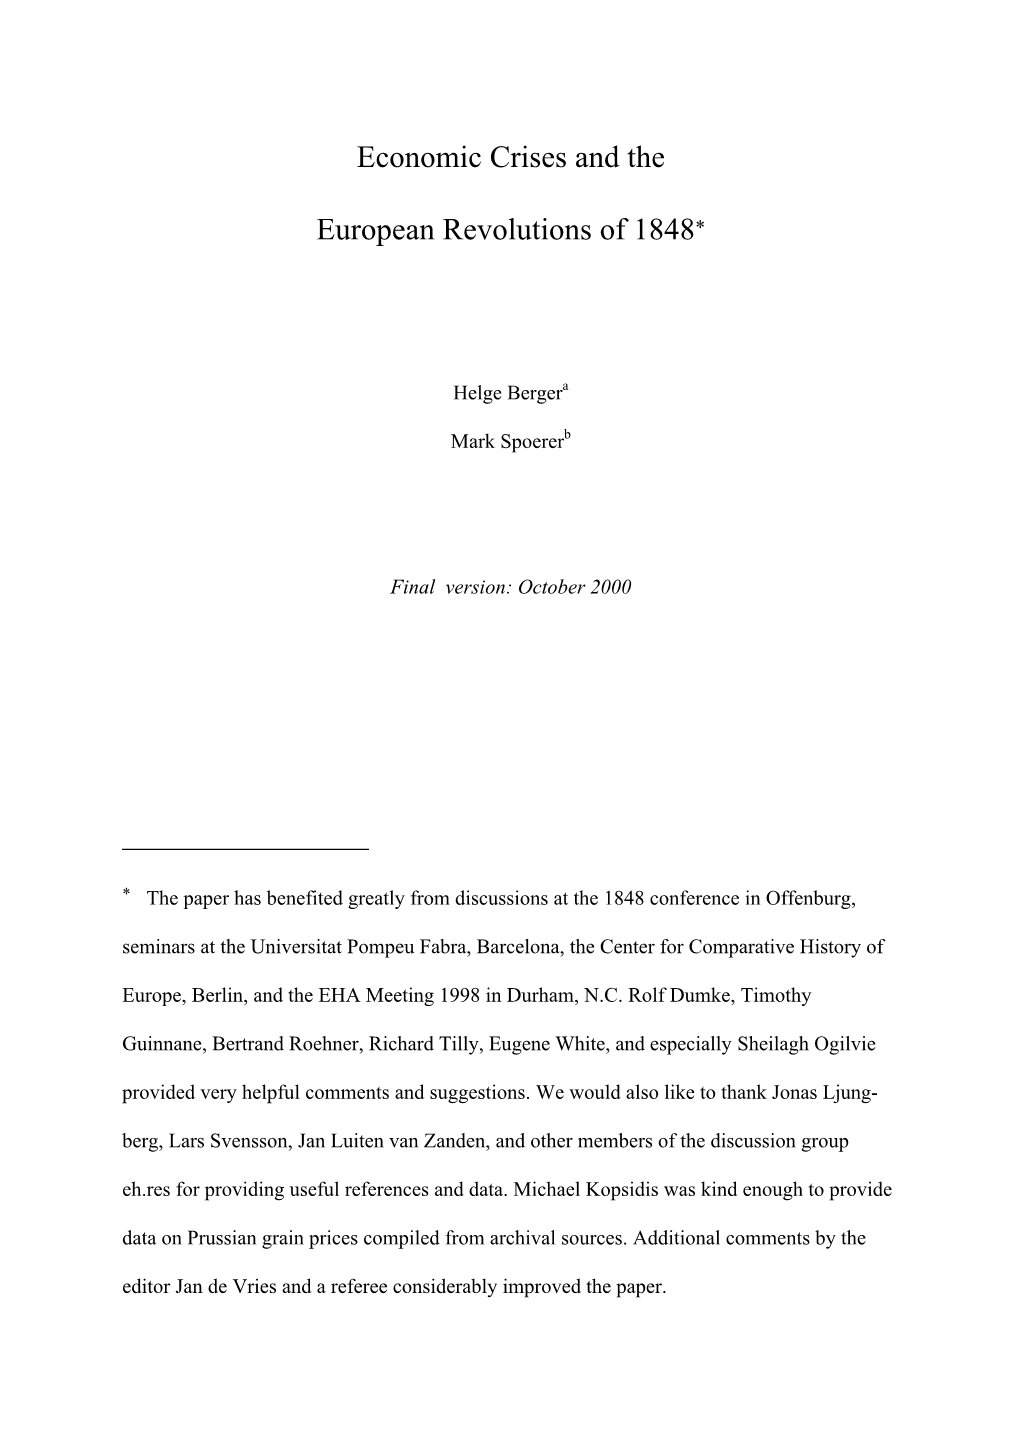 Economic Crises and the European Revolutions of 1848*